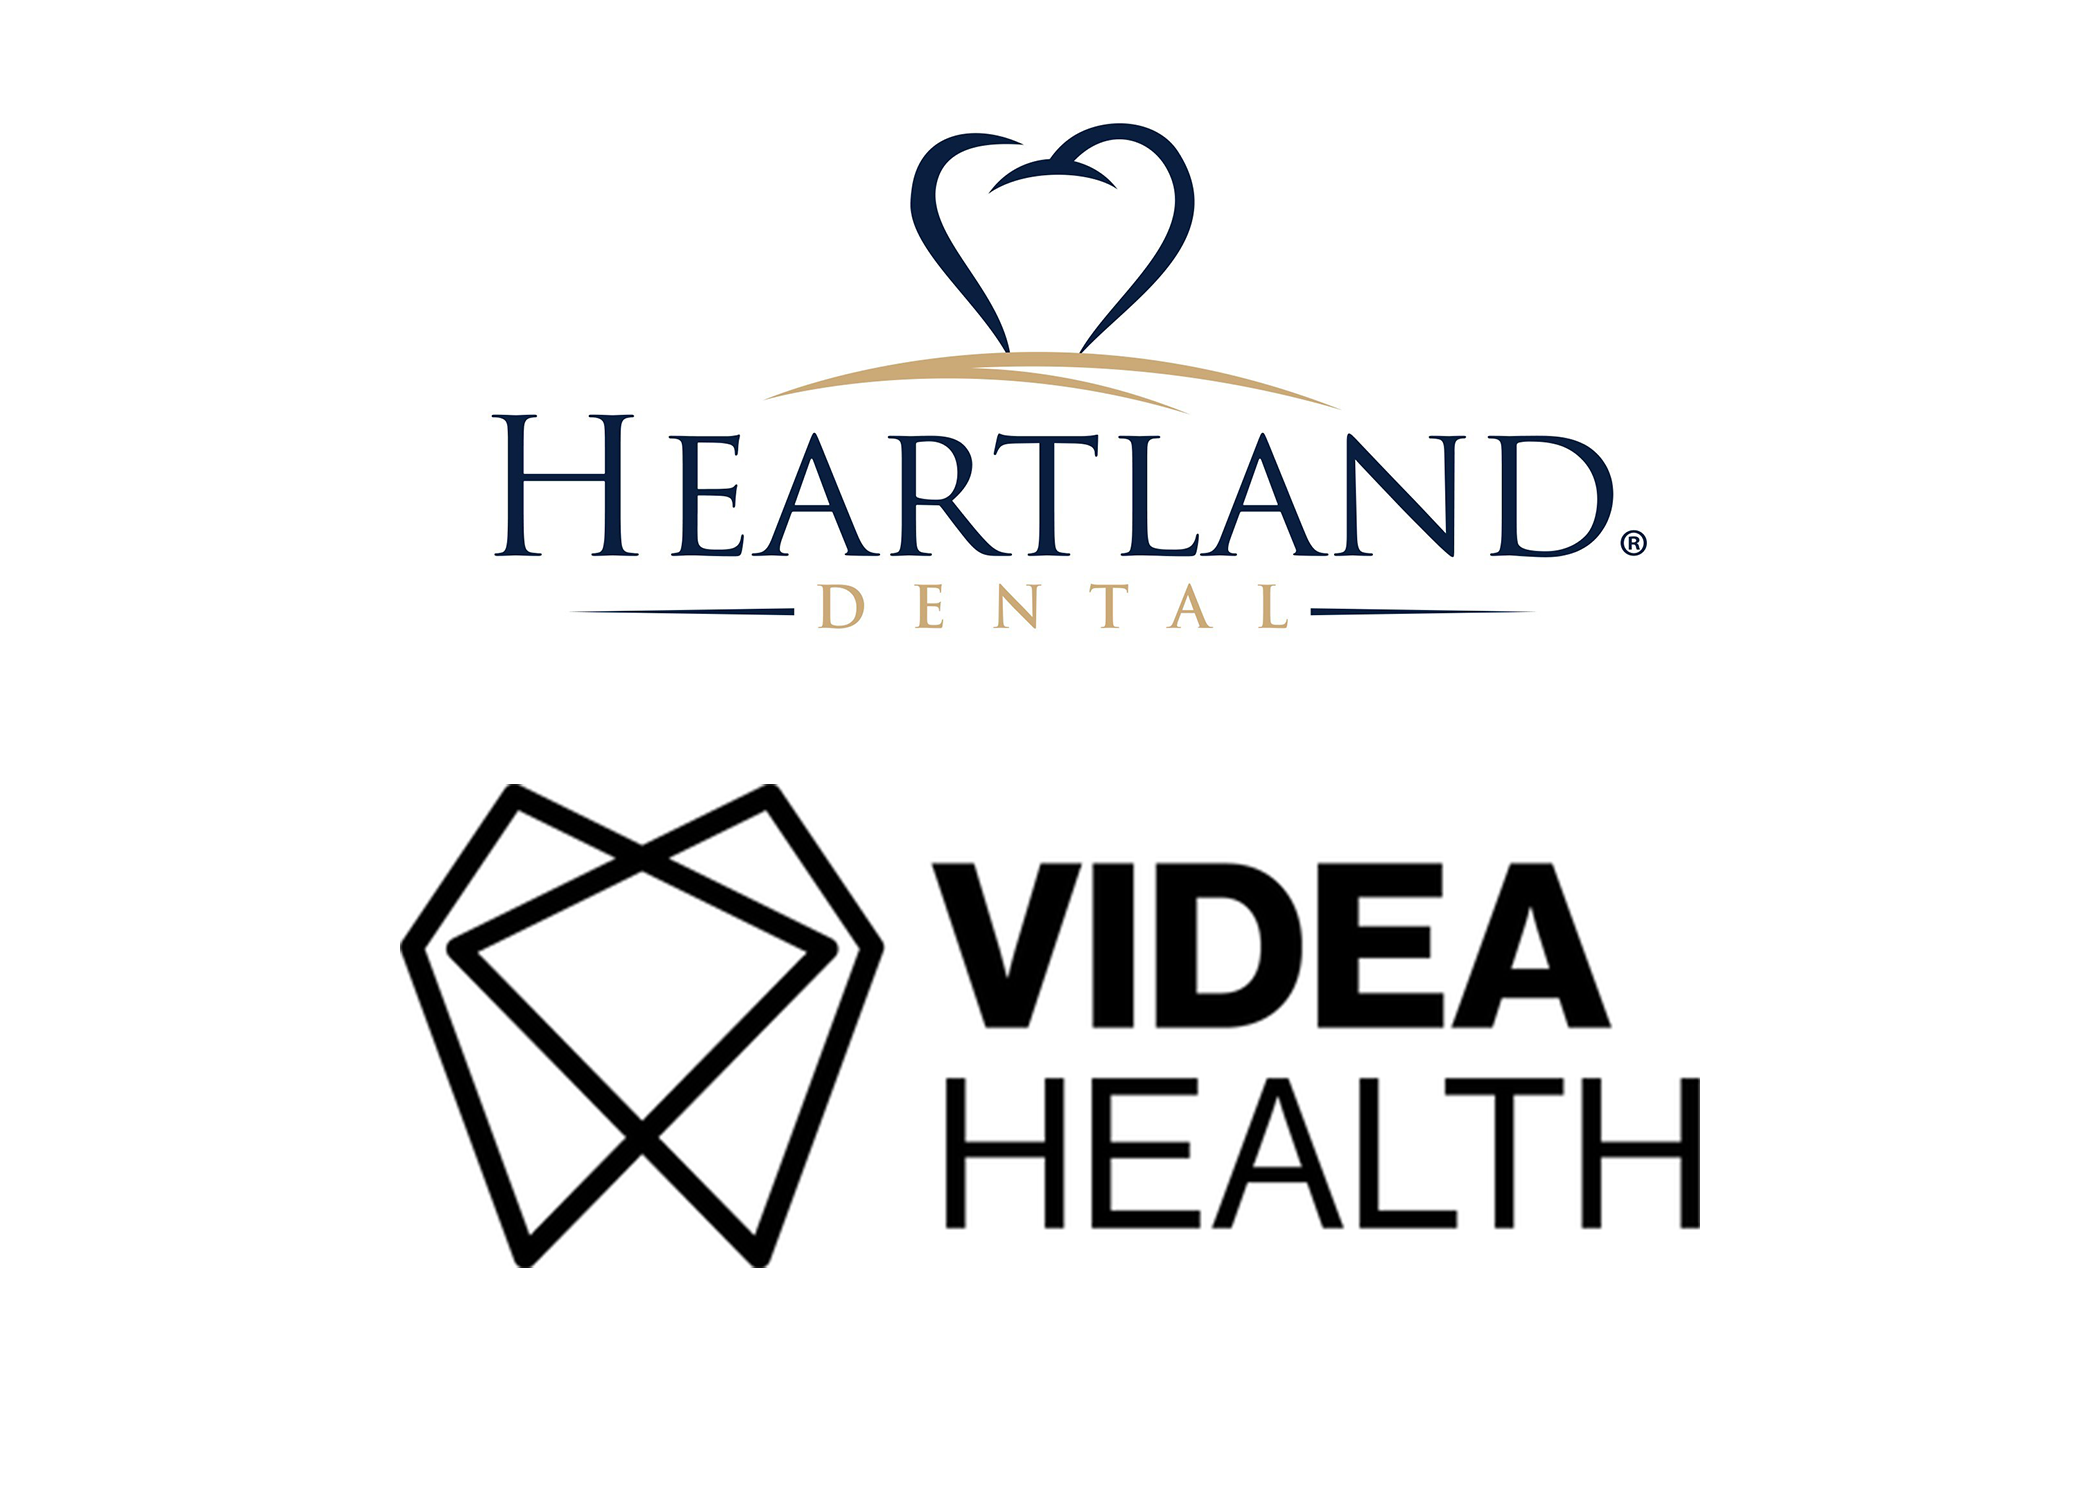 Heartland Dental Selects VideaHealth as Dental Artificial Intelligence Partner. Image credits: © Heartland Dental, VideaHealth